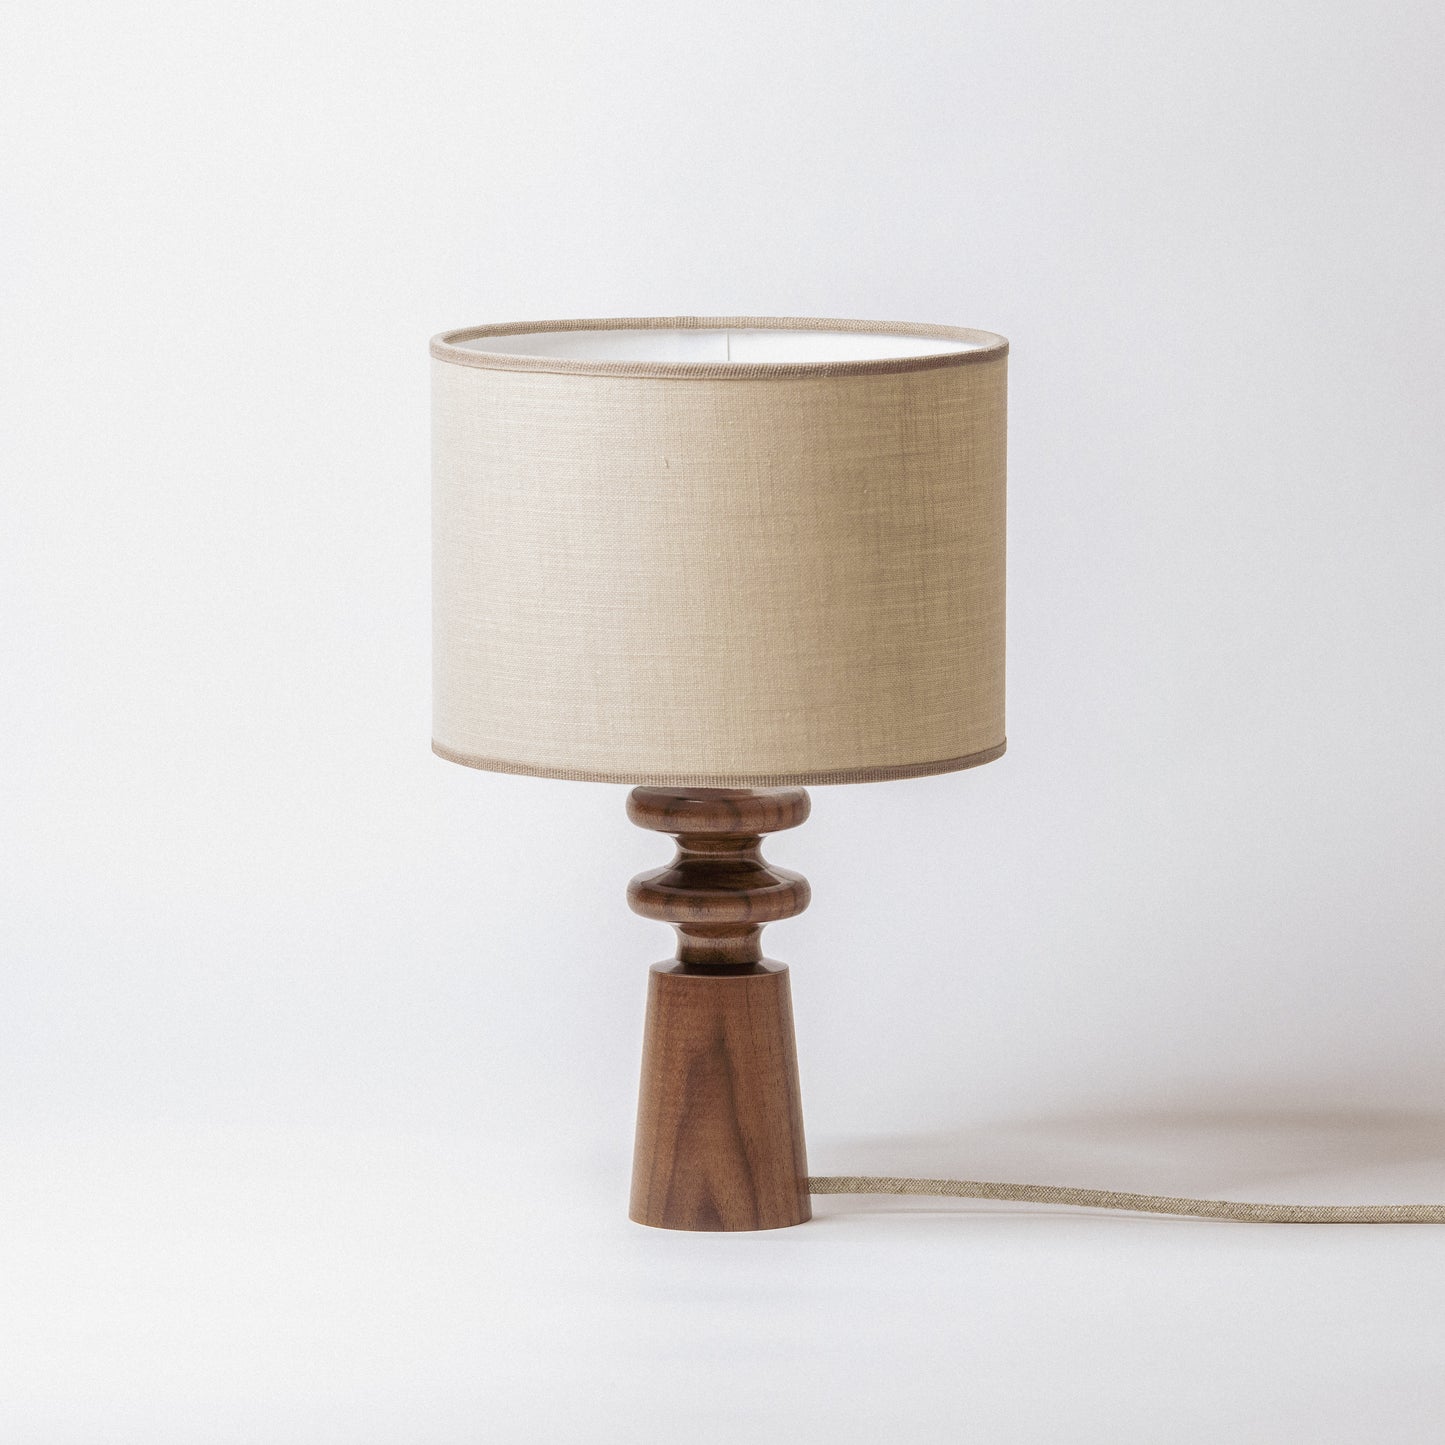 Frustum Cone Small Wood Table Lamp